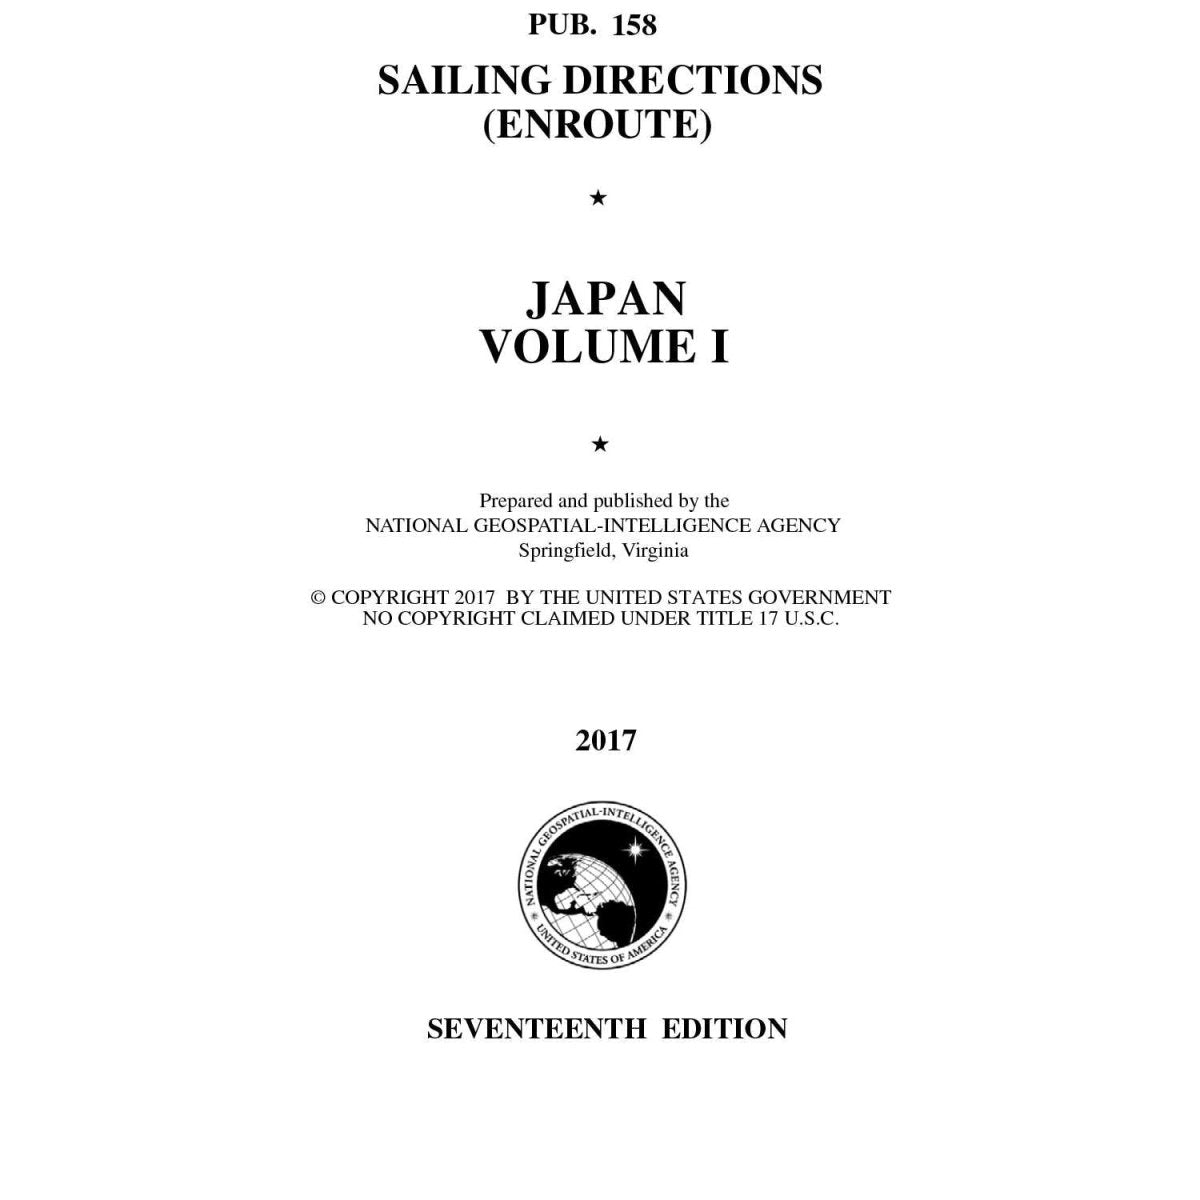 PUB 158 Sailing Directions Enroute: Japan Vol 1 (Current Edition) - Life Raft Professionals